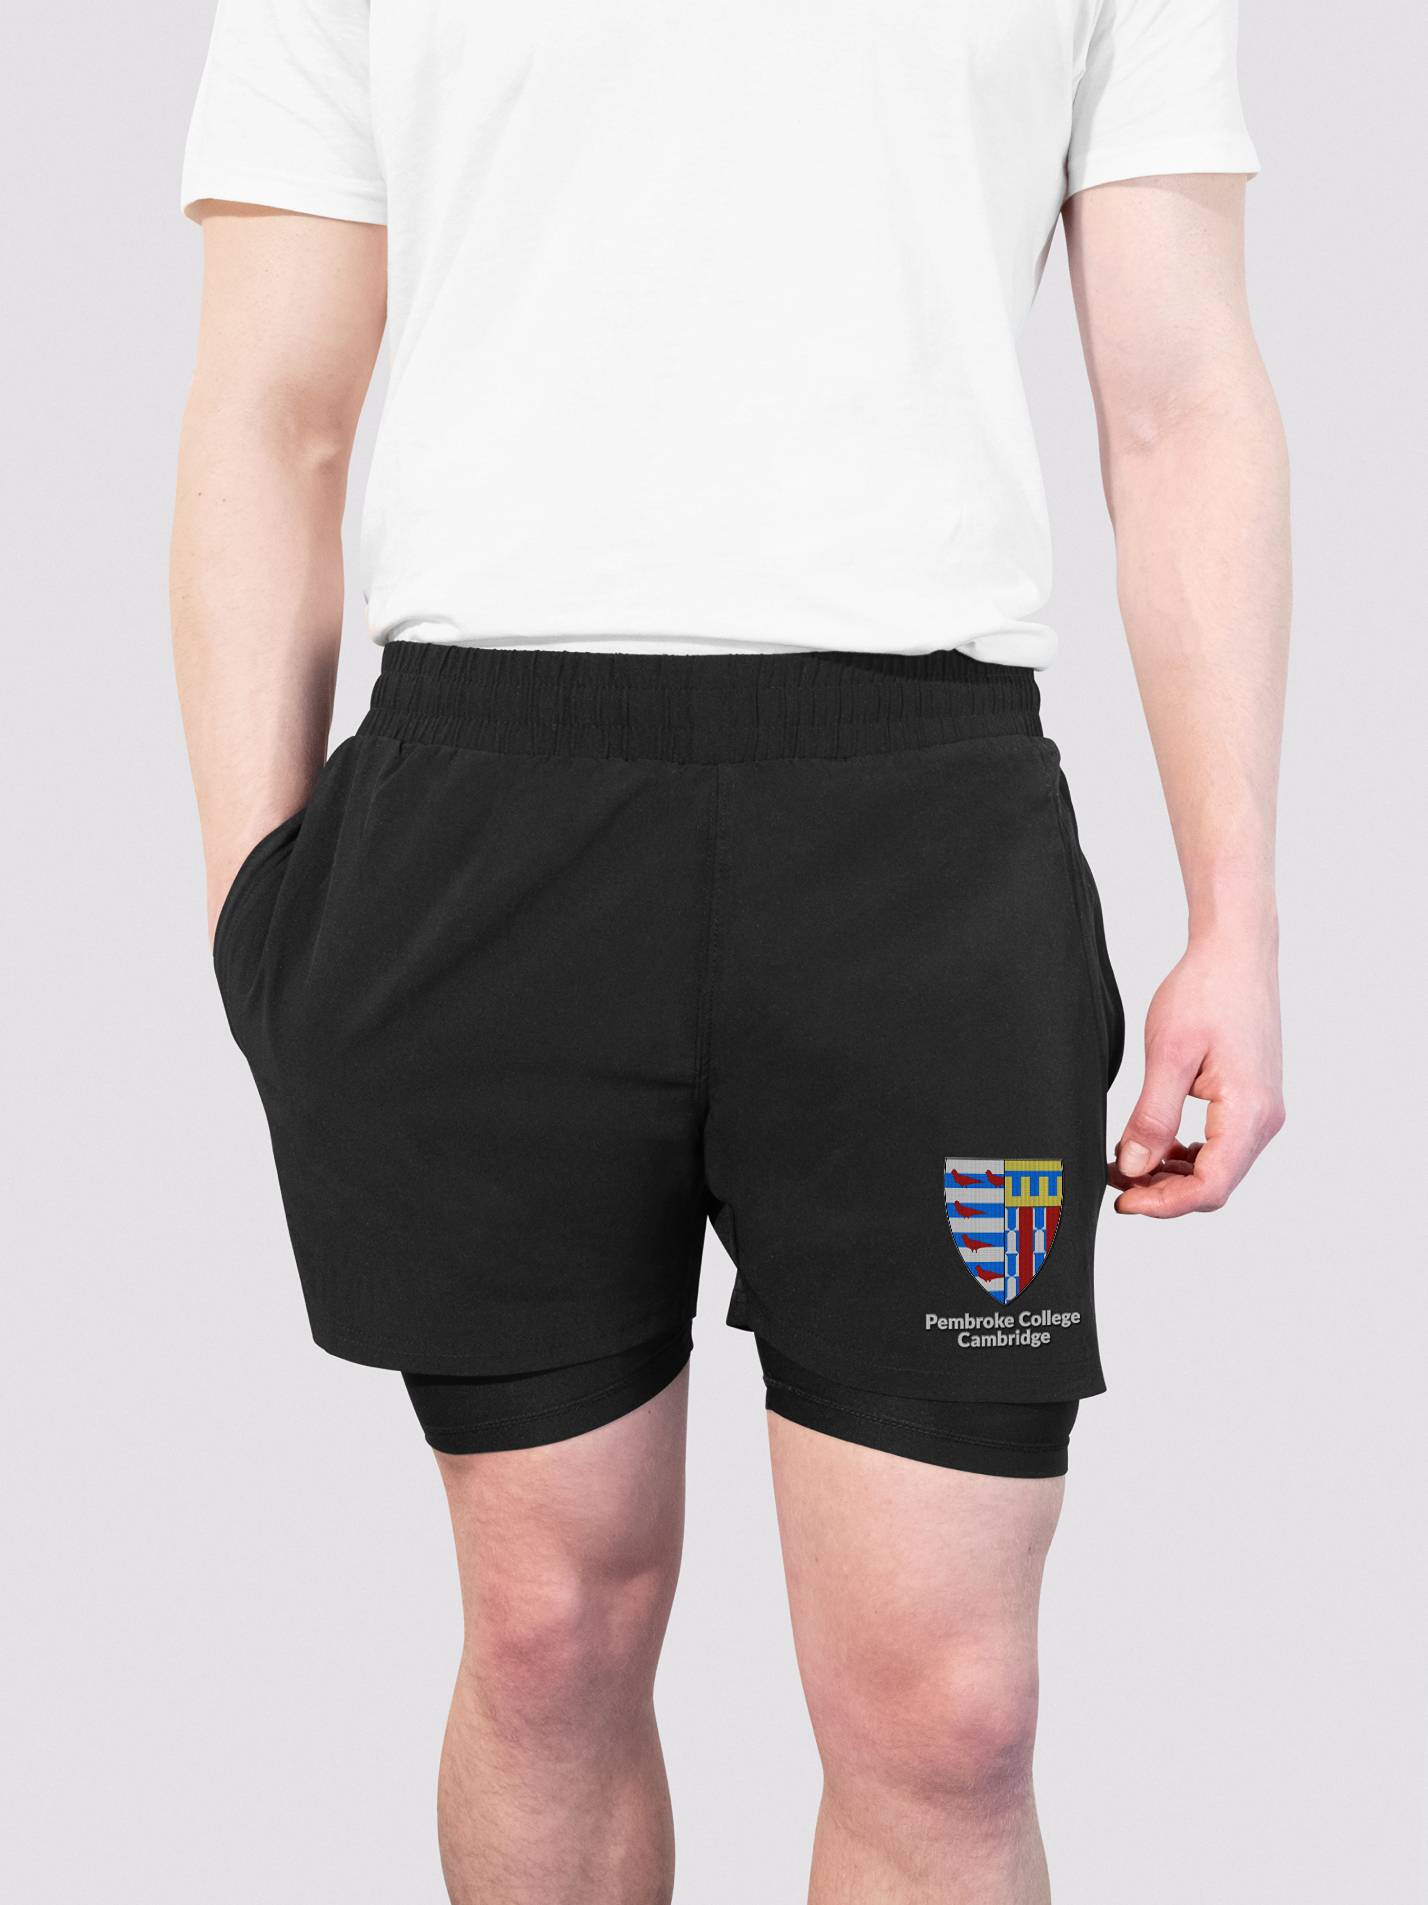 Pembroke College Cambridge Dual Layer Sports Shorts